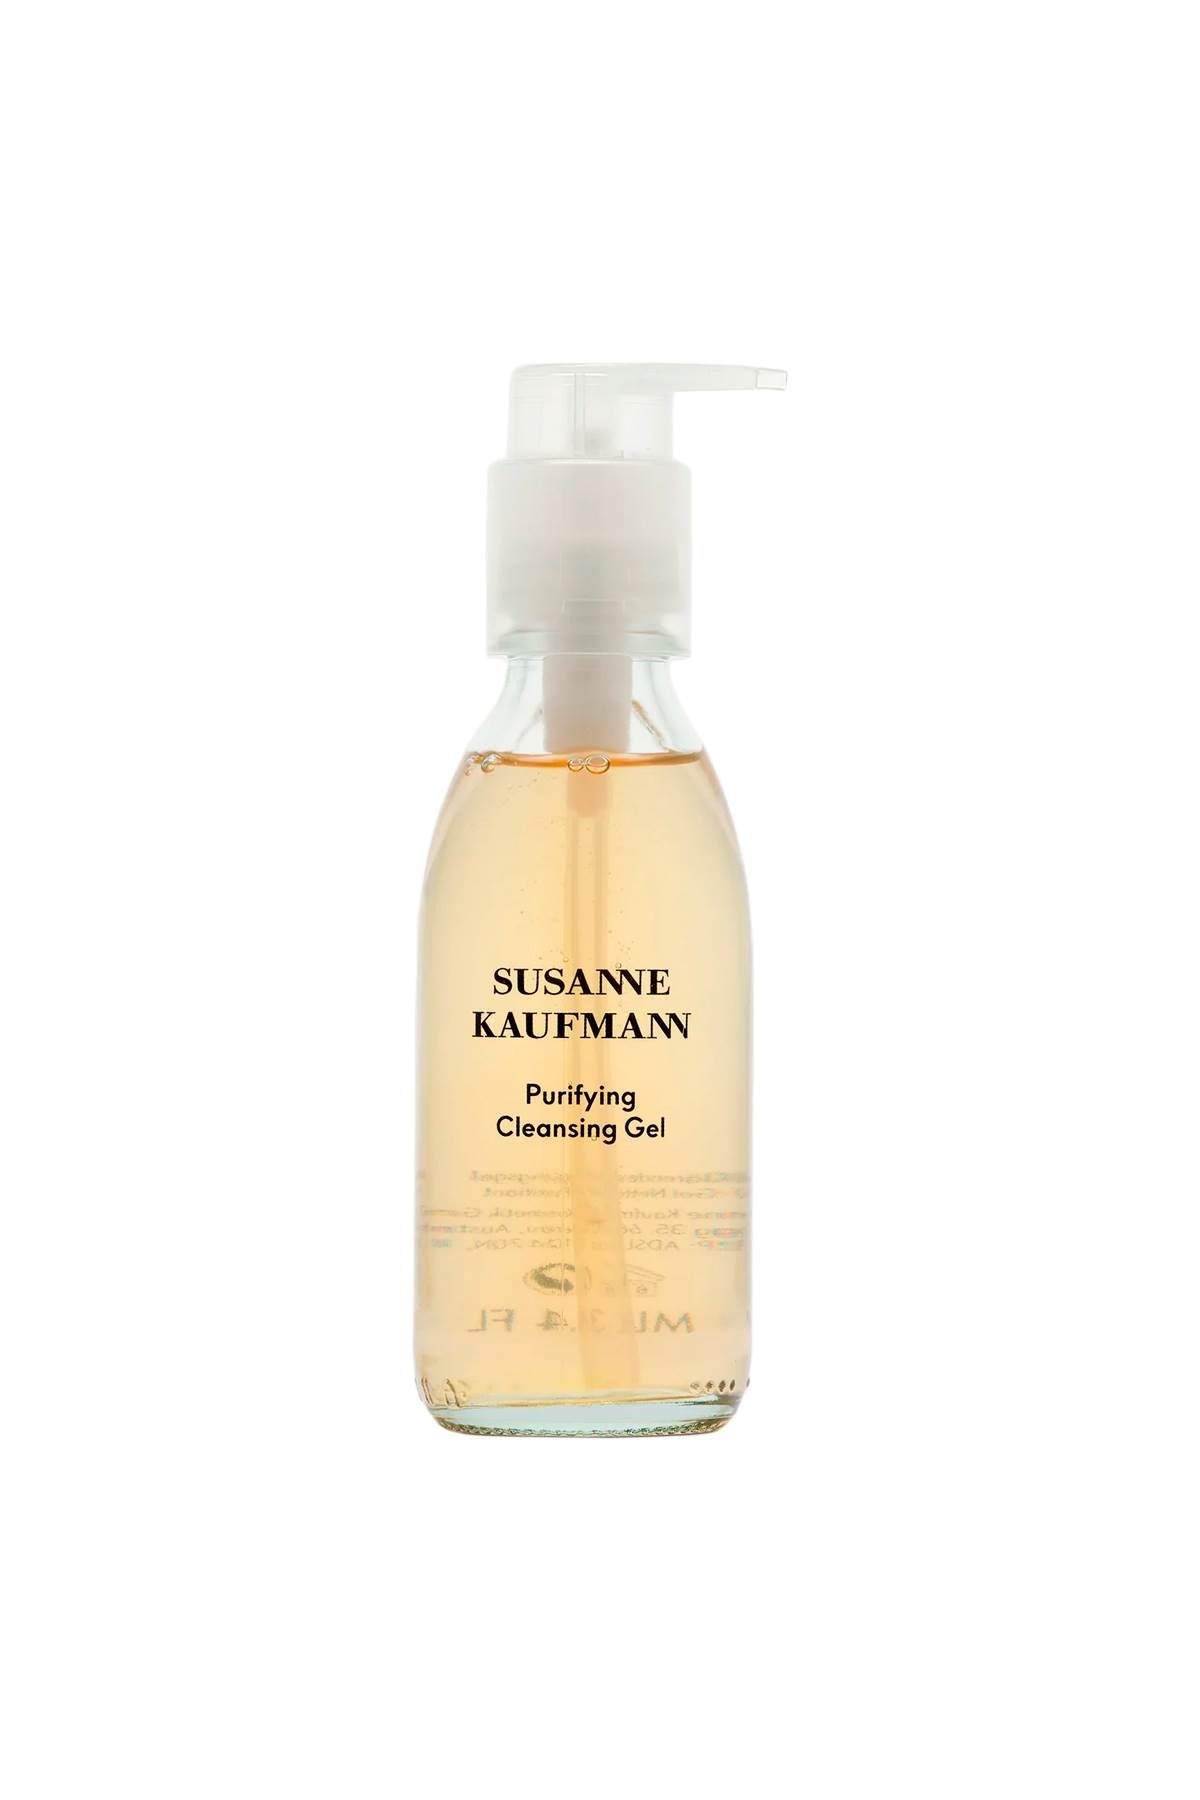 Susanne kaufmann purifying cleansing gel - 100 ml-0